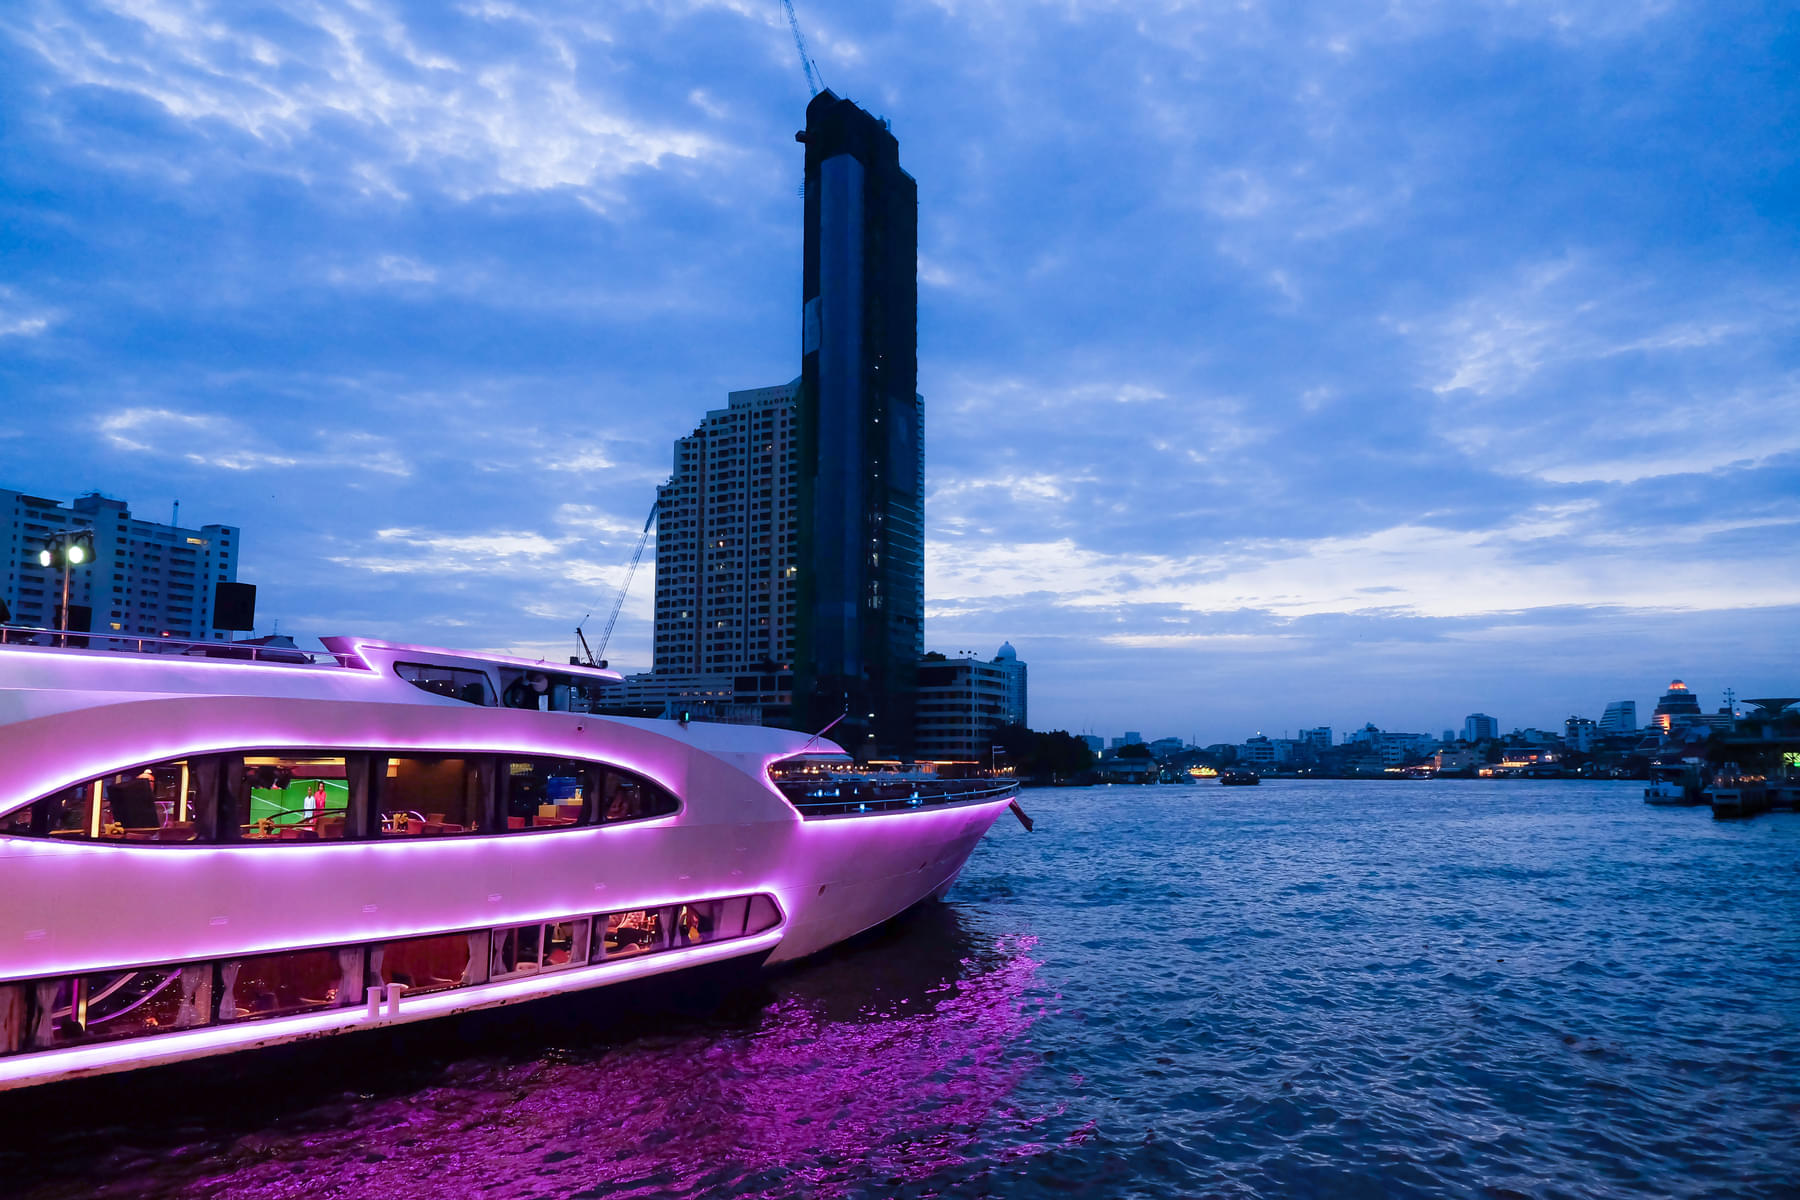 Enjoy a fun evening on the beautiful Chao Phraya river